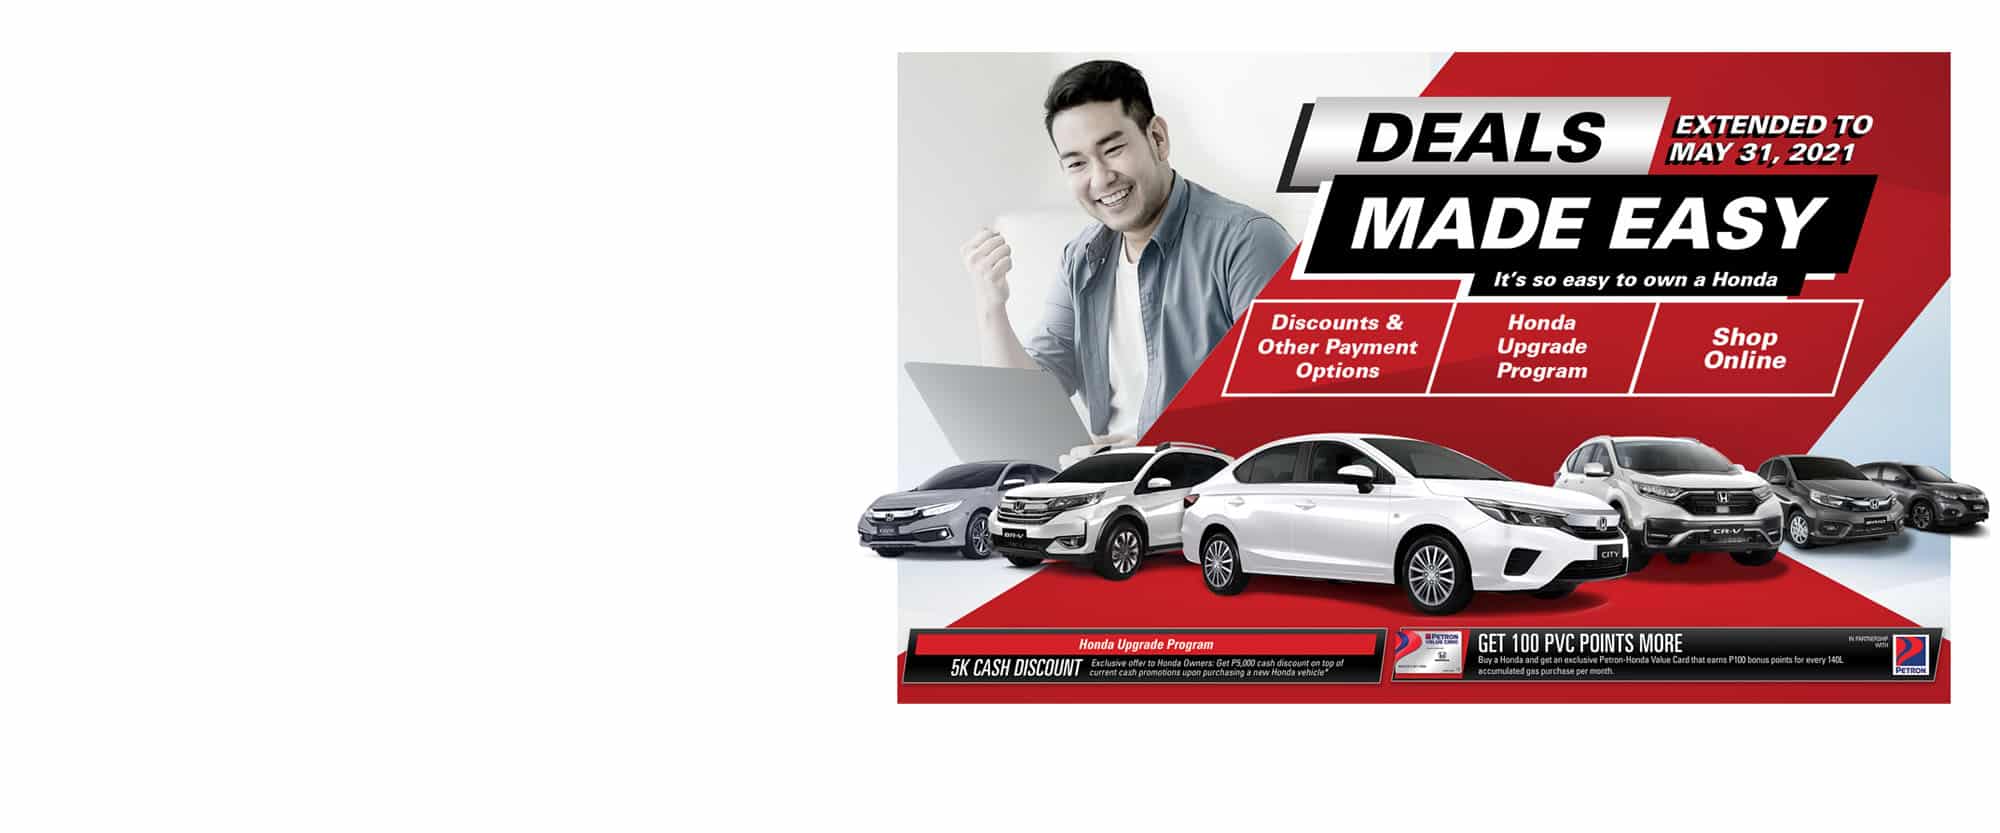 Honda Cars Philippines › Auto Loan